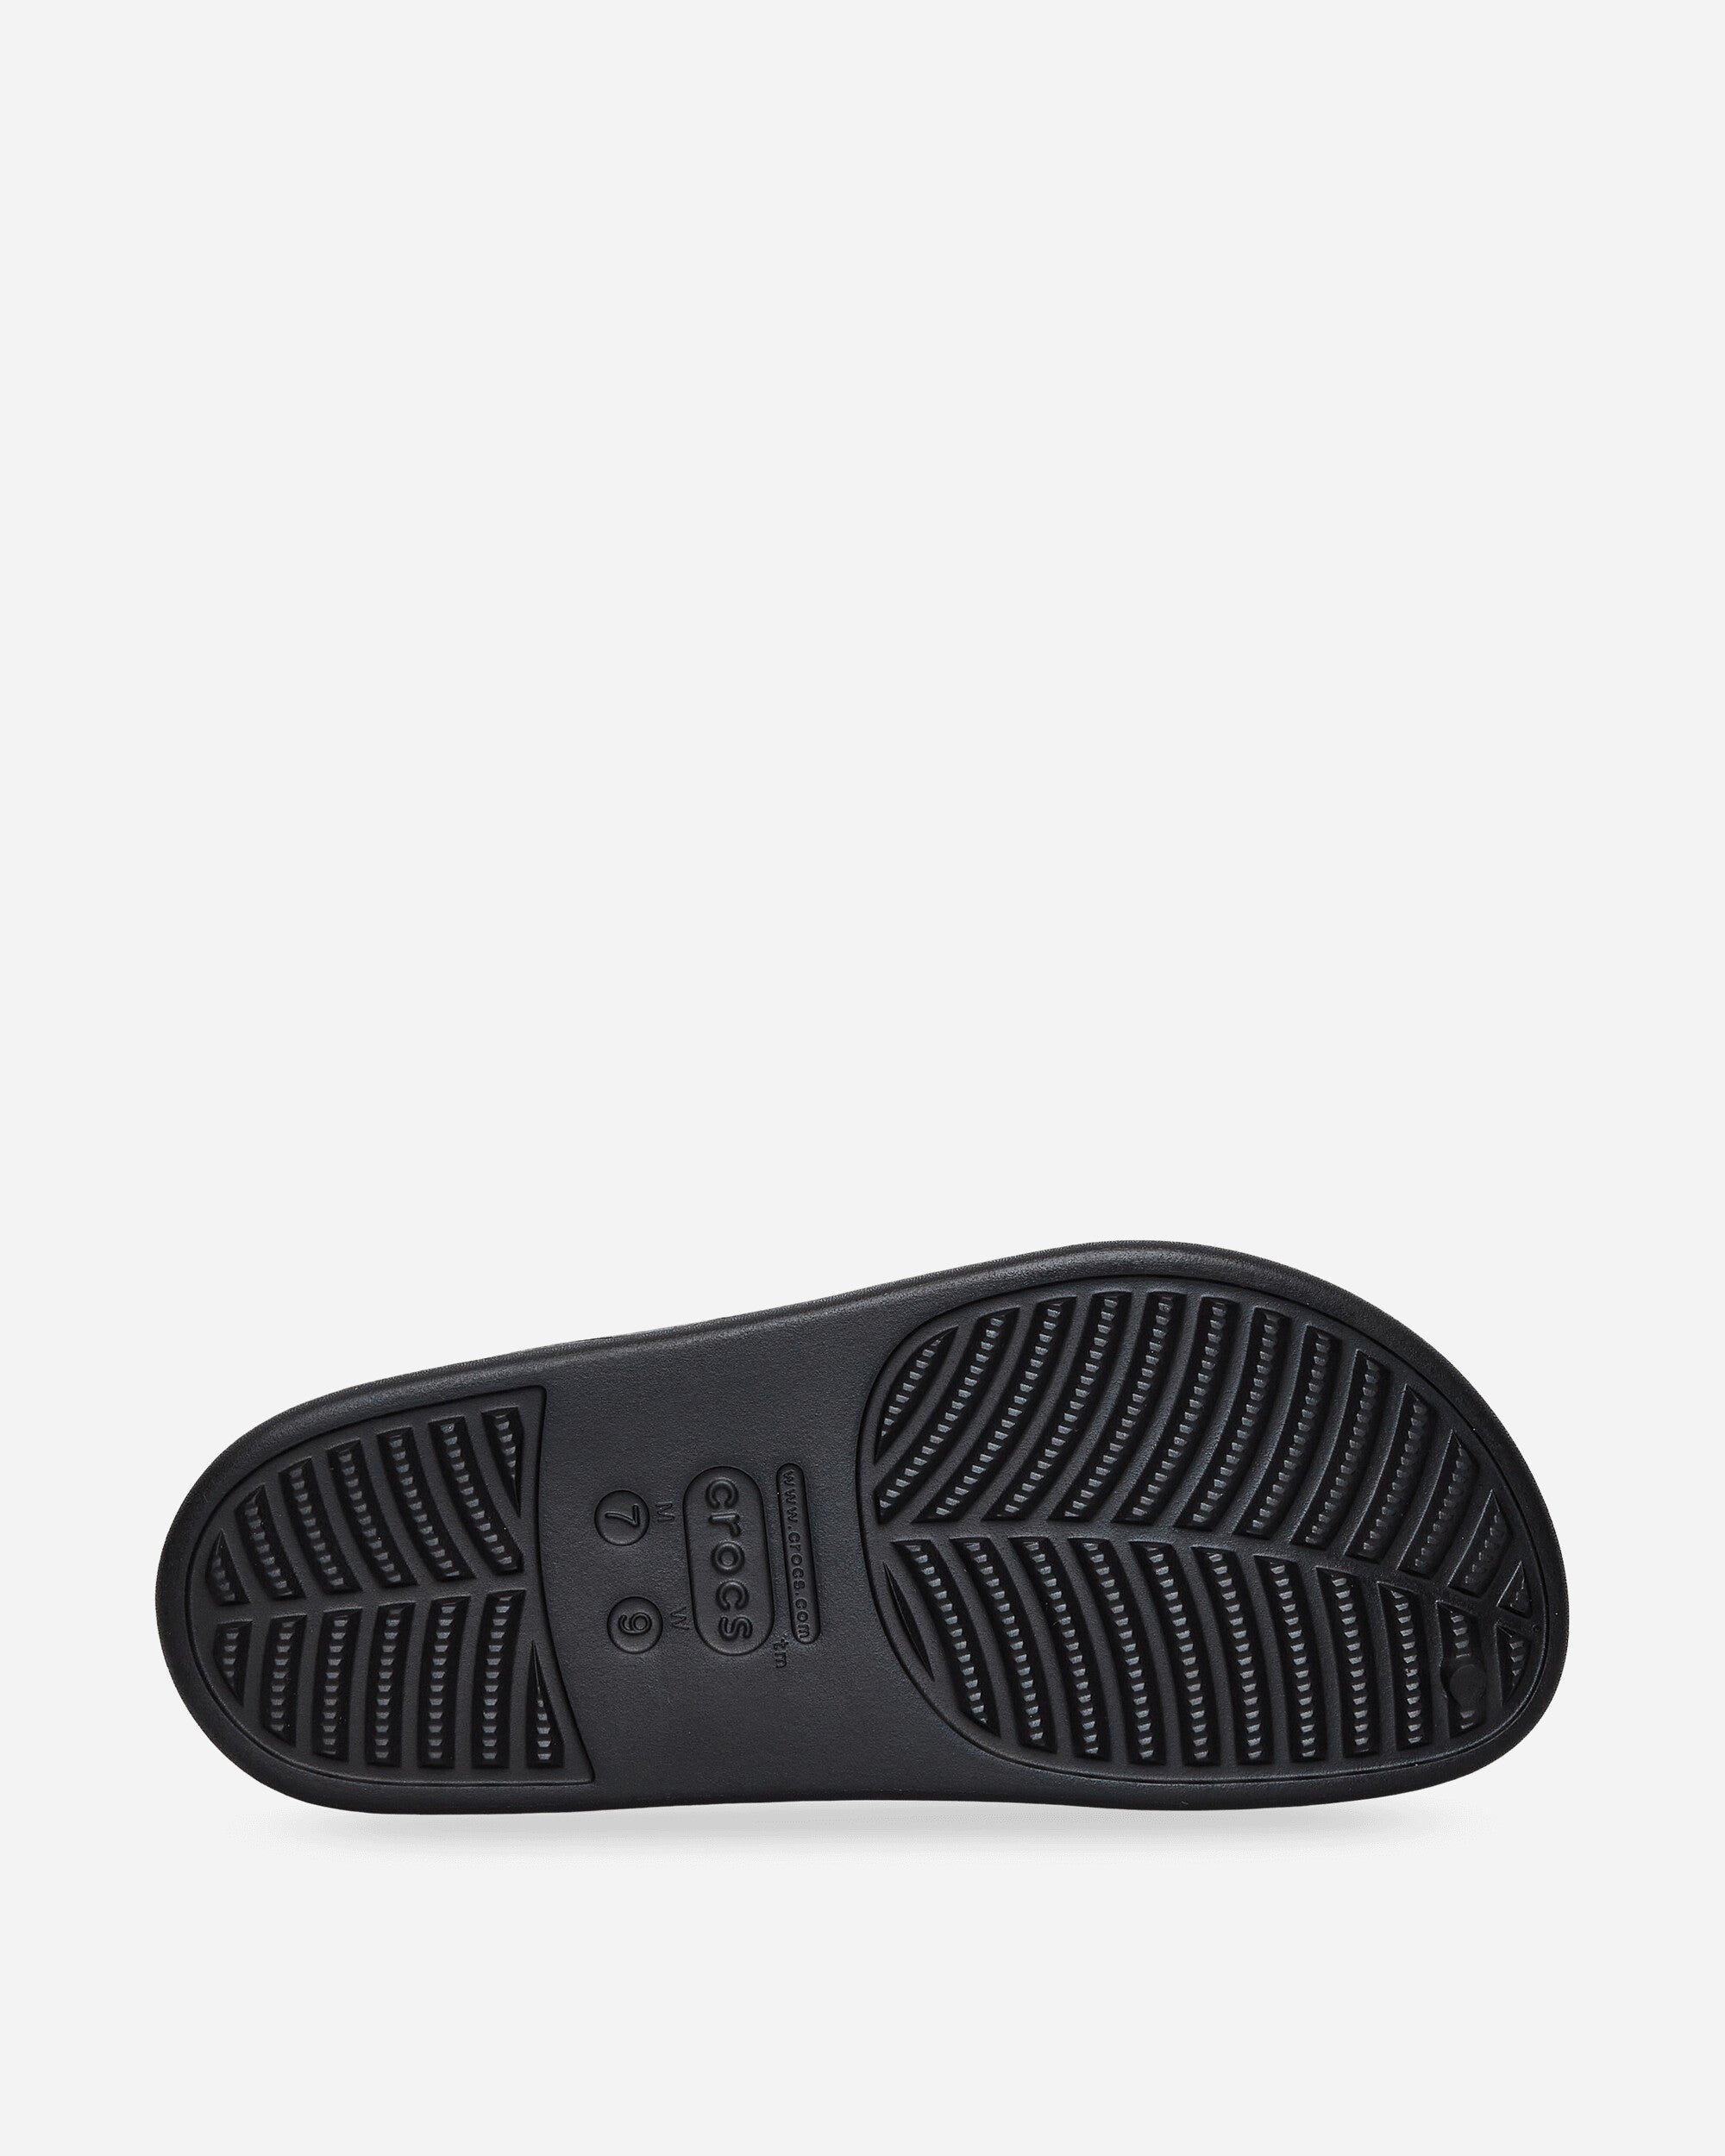 Crocs Dylan Clog Black Sandals and Slides Sandals and Mules 209366W BLK